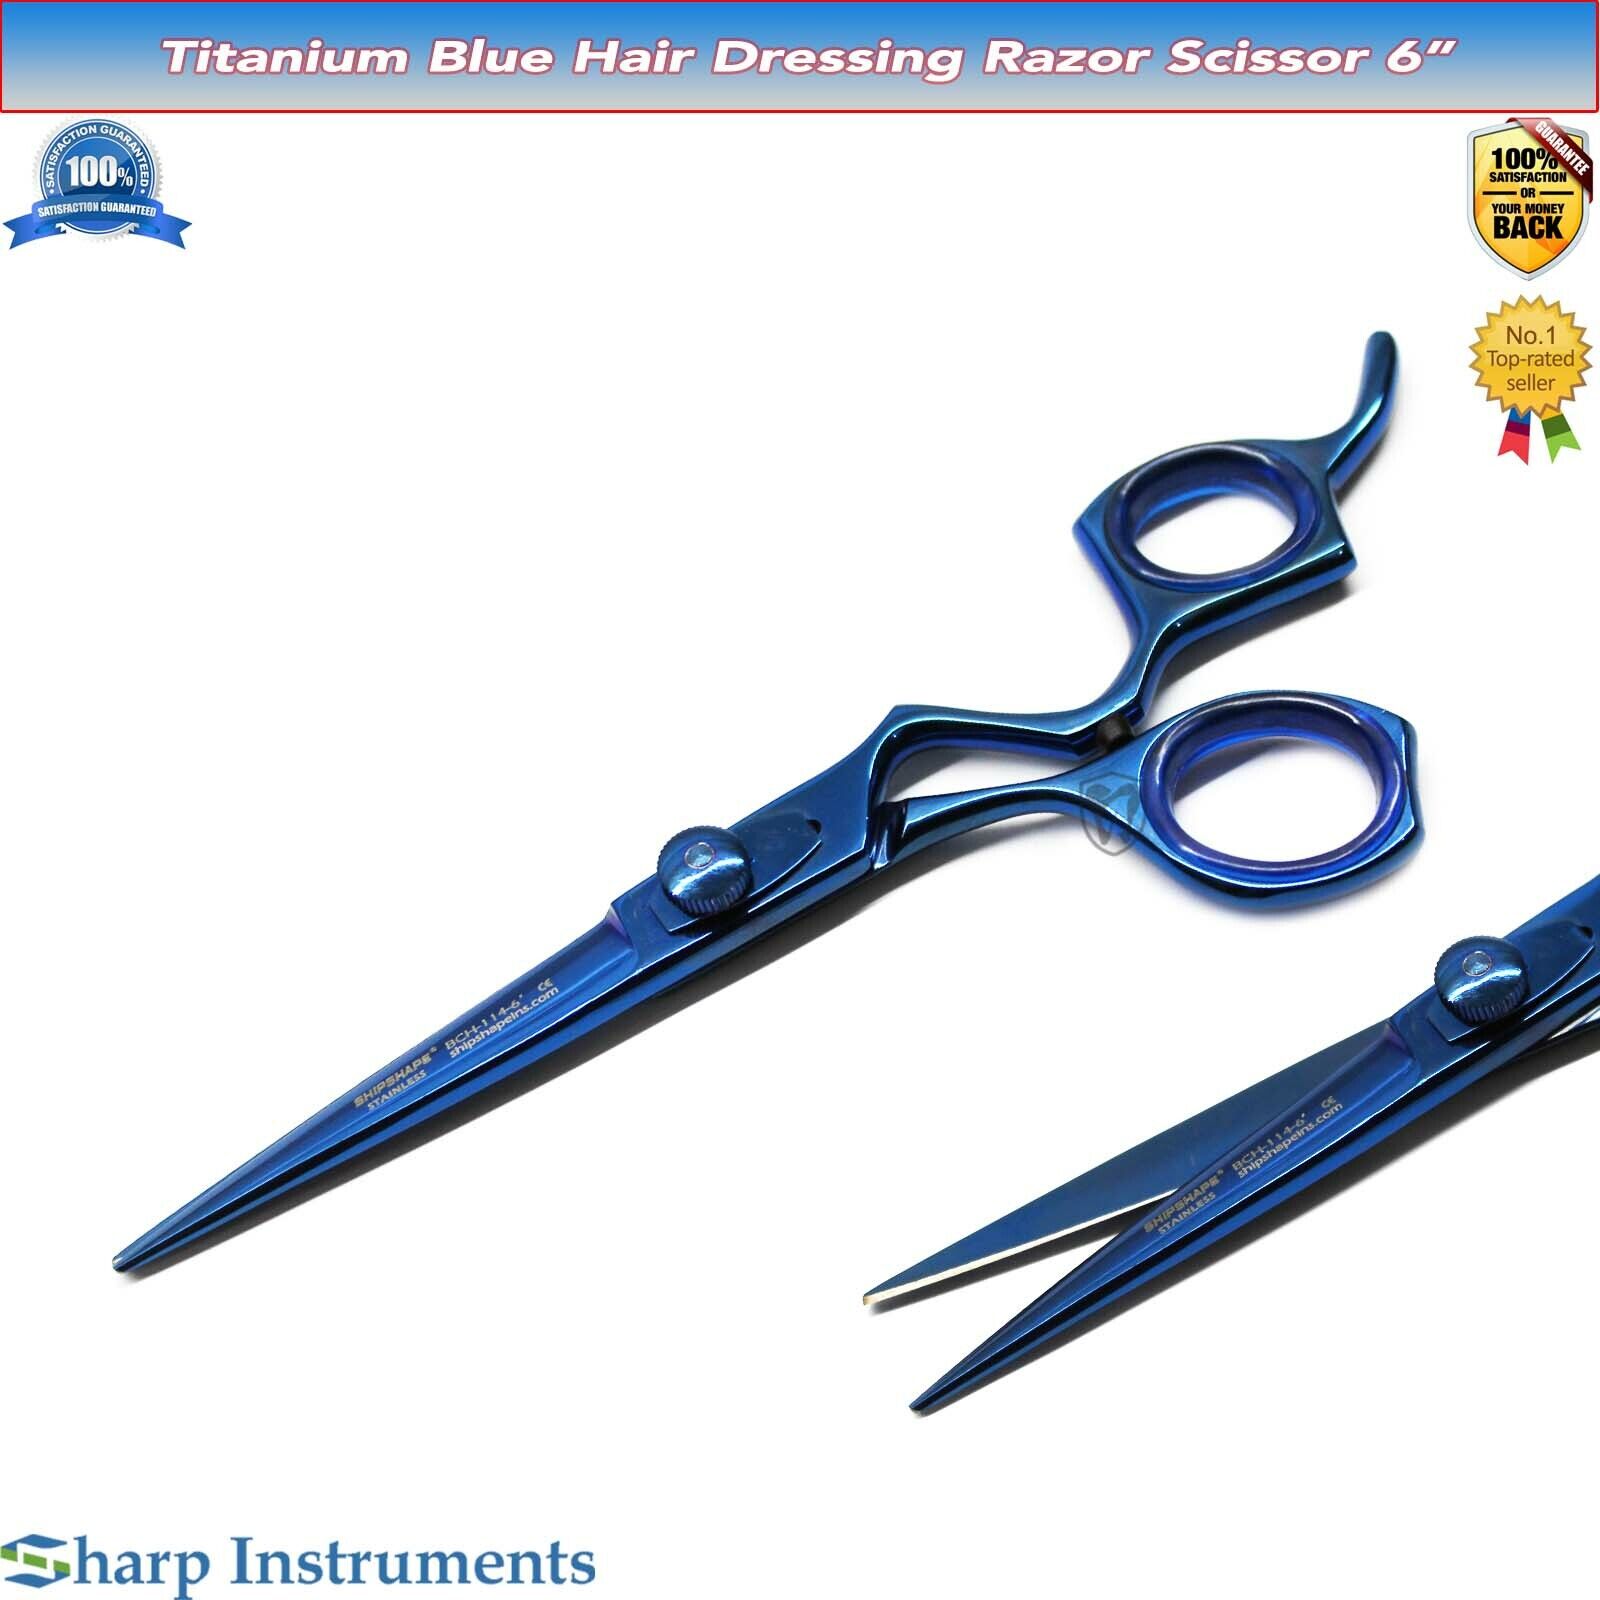 Japanese Hair Cutting Scissor, Styling Hairdressing Shears/Scissors Barber Salon